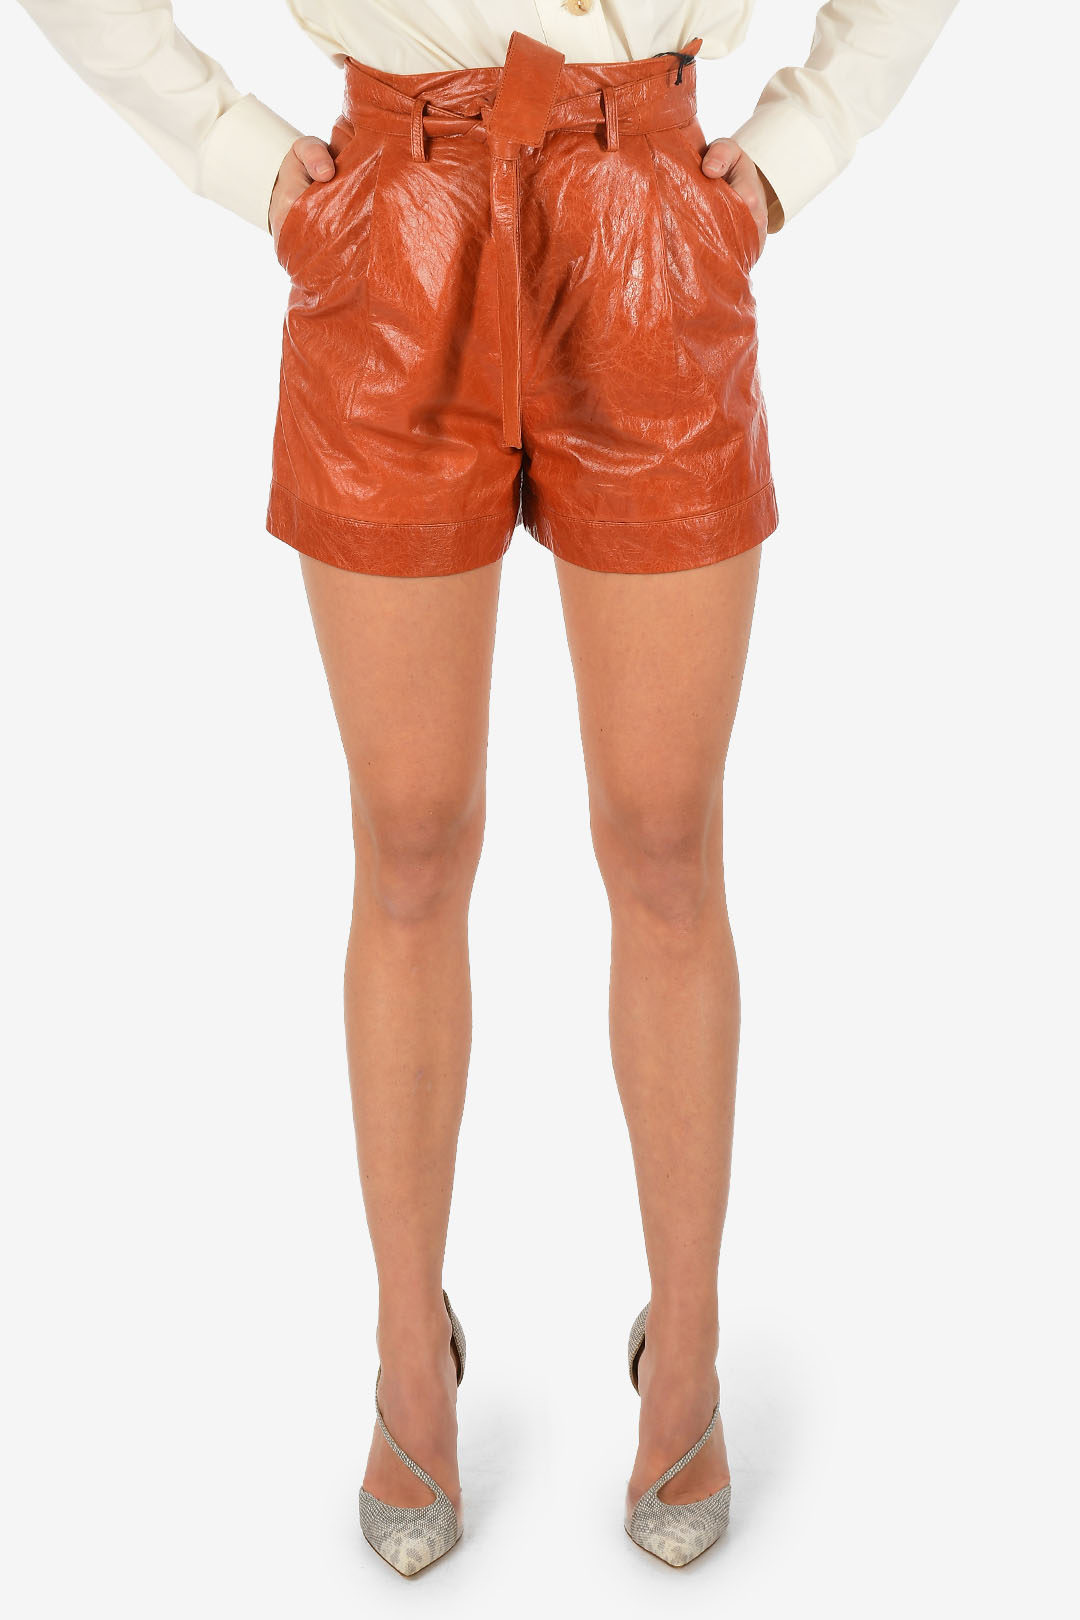 https://data.glamood.com/imgprodotto/high-waist-leather-shorts-with-belt_933744_zoom.jpg